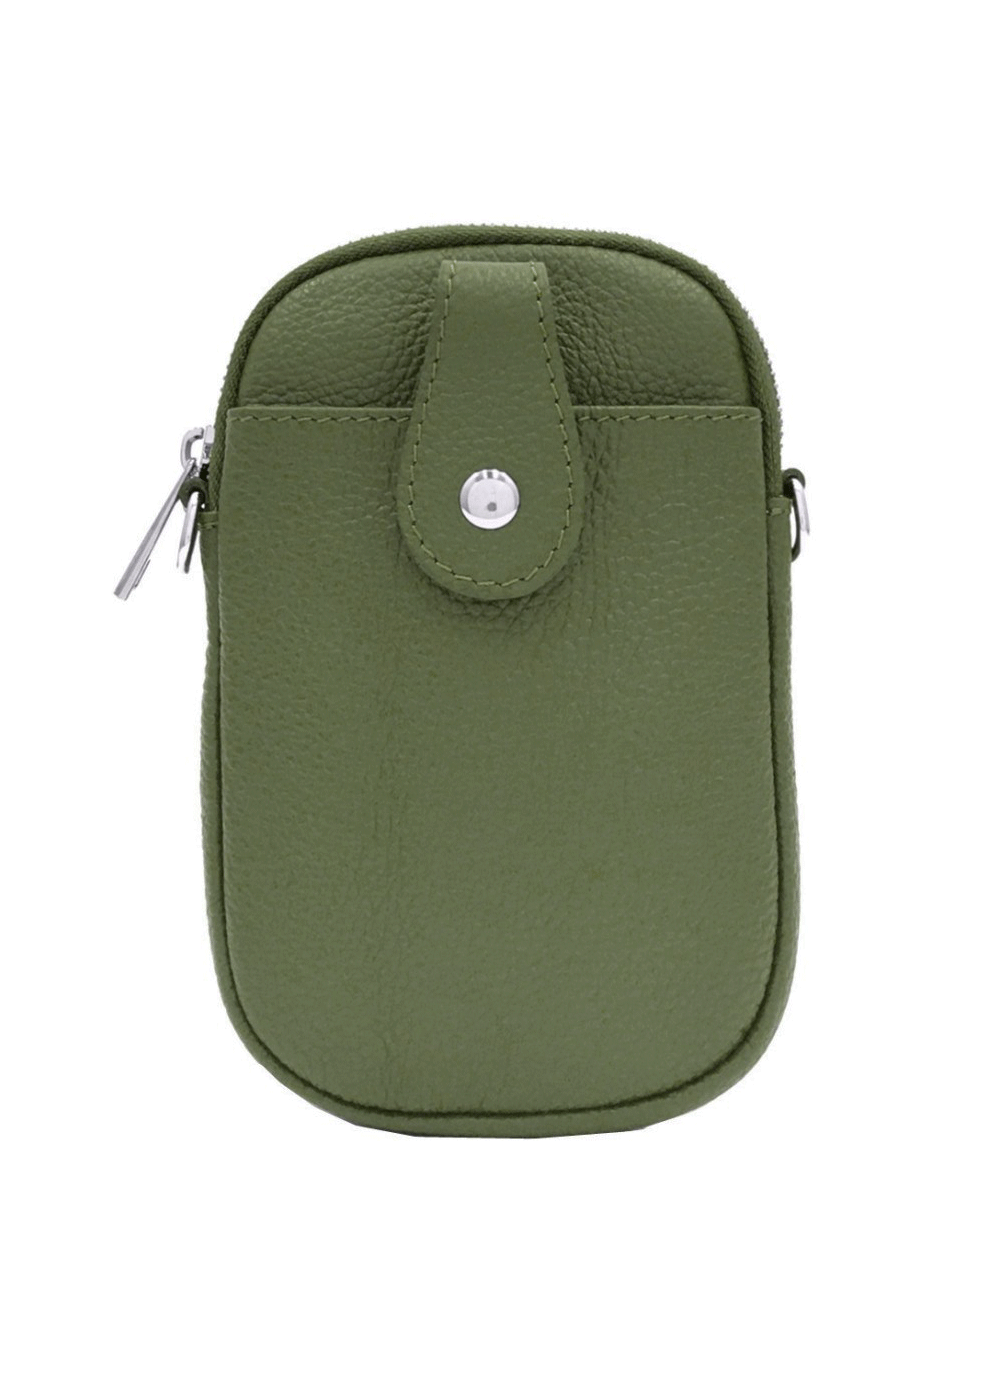 Khaki Leather Phone Bag